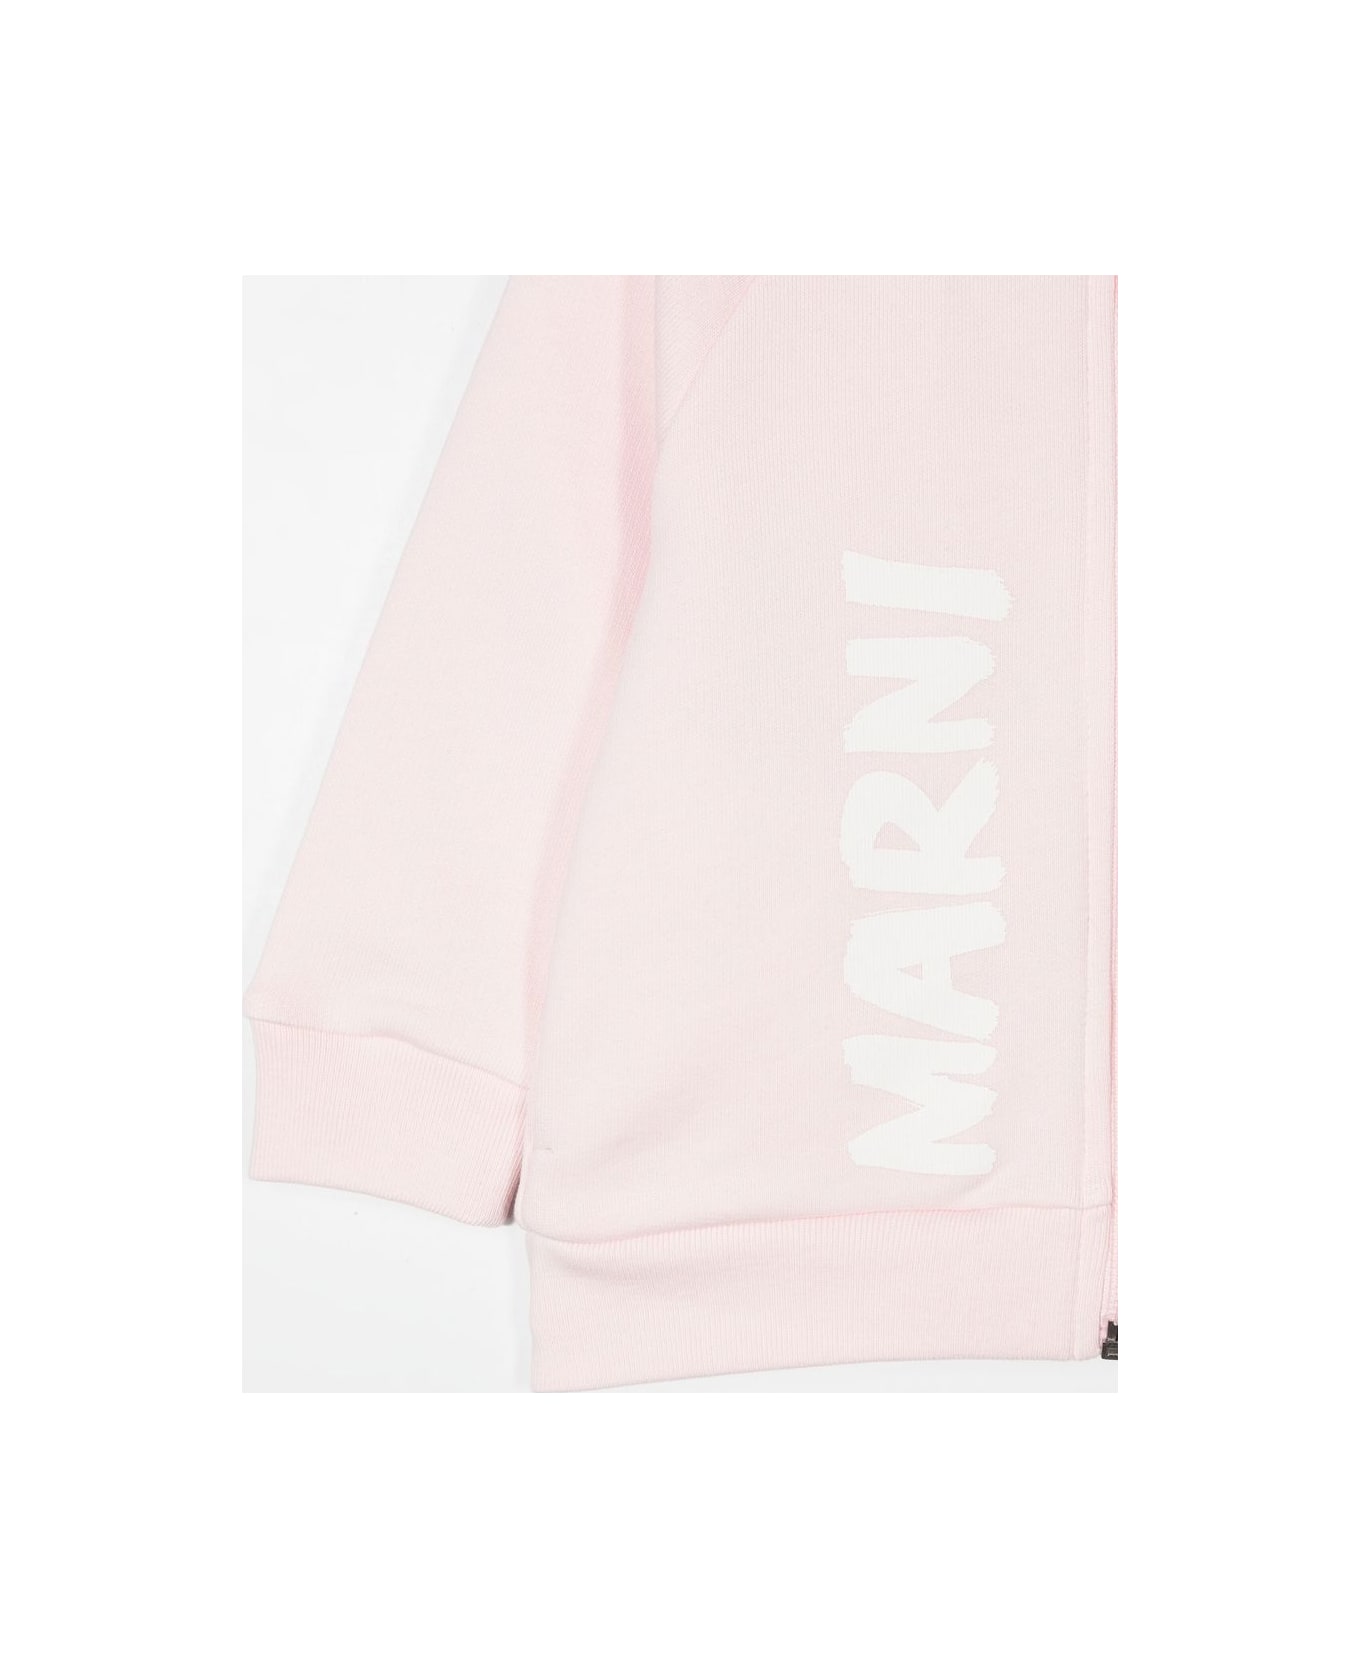 Marni Sweatshirt With Logo - Pink